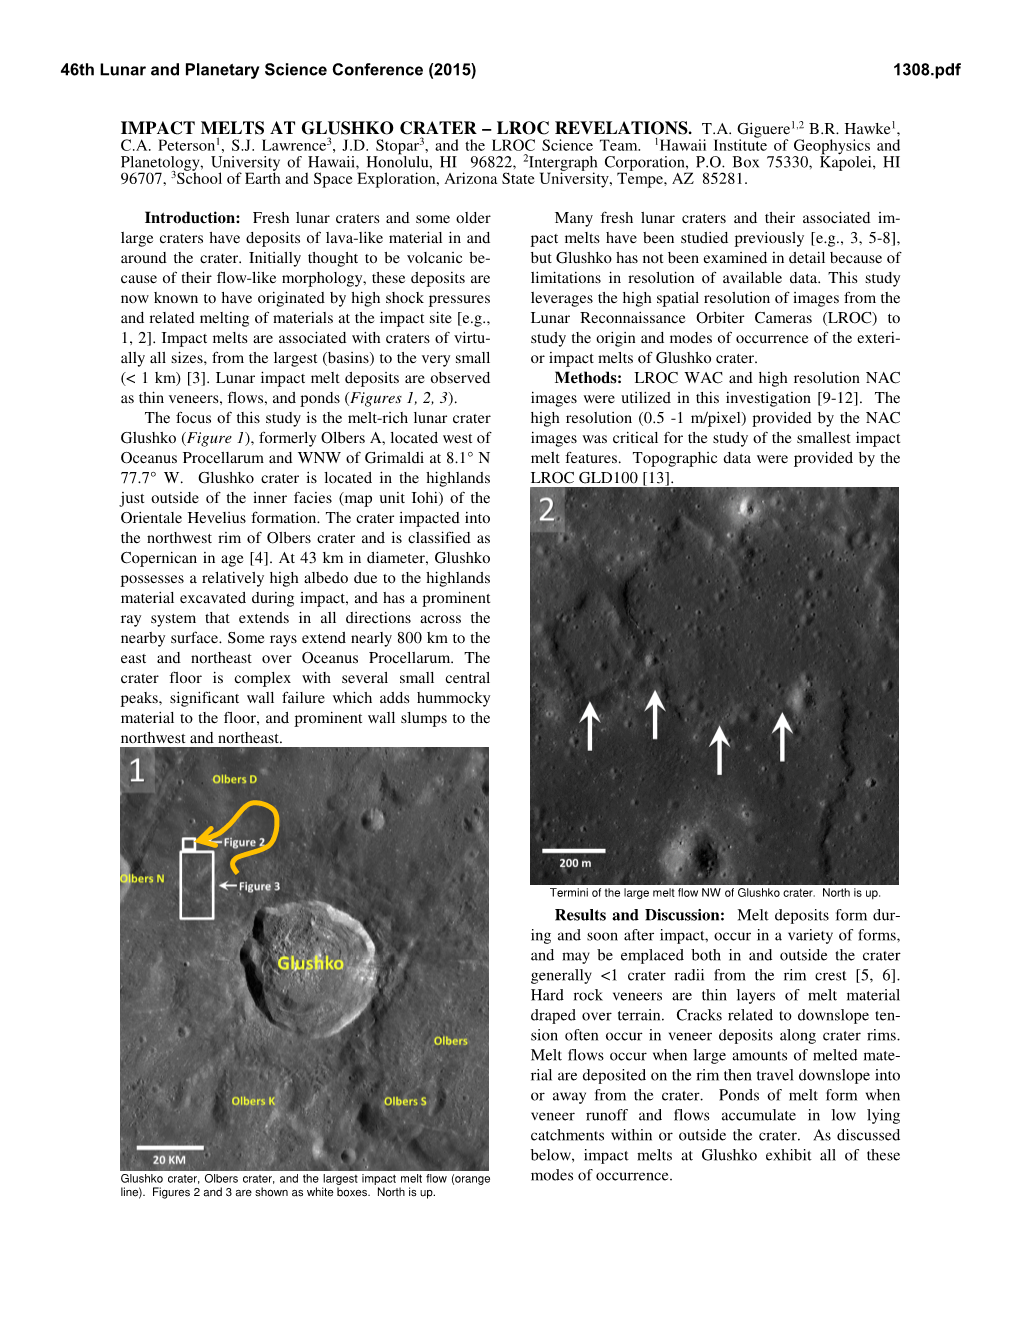 Impact Melts at Glushko Crater – Lroc Revelations